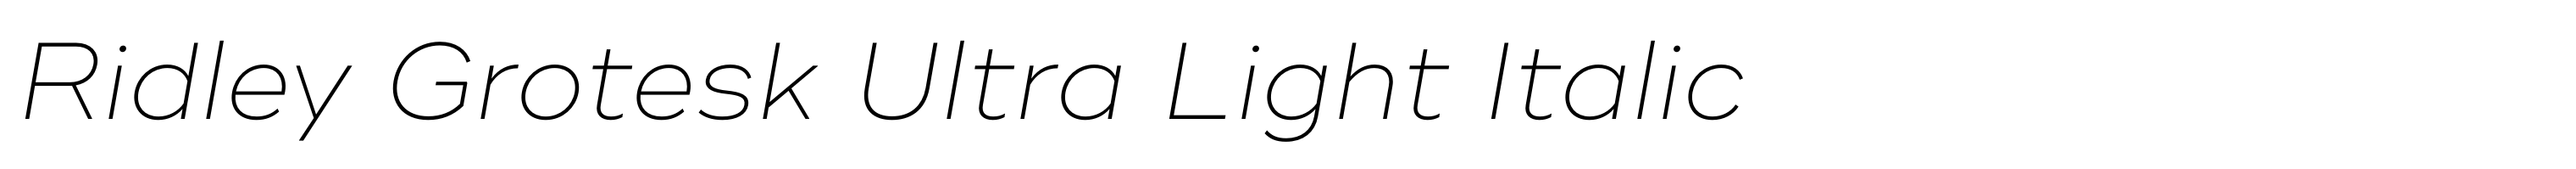 Ridley Grotesk Ultra Light Italic